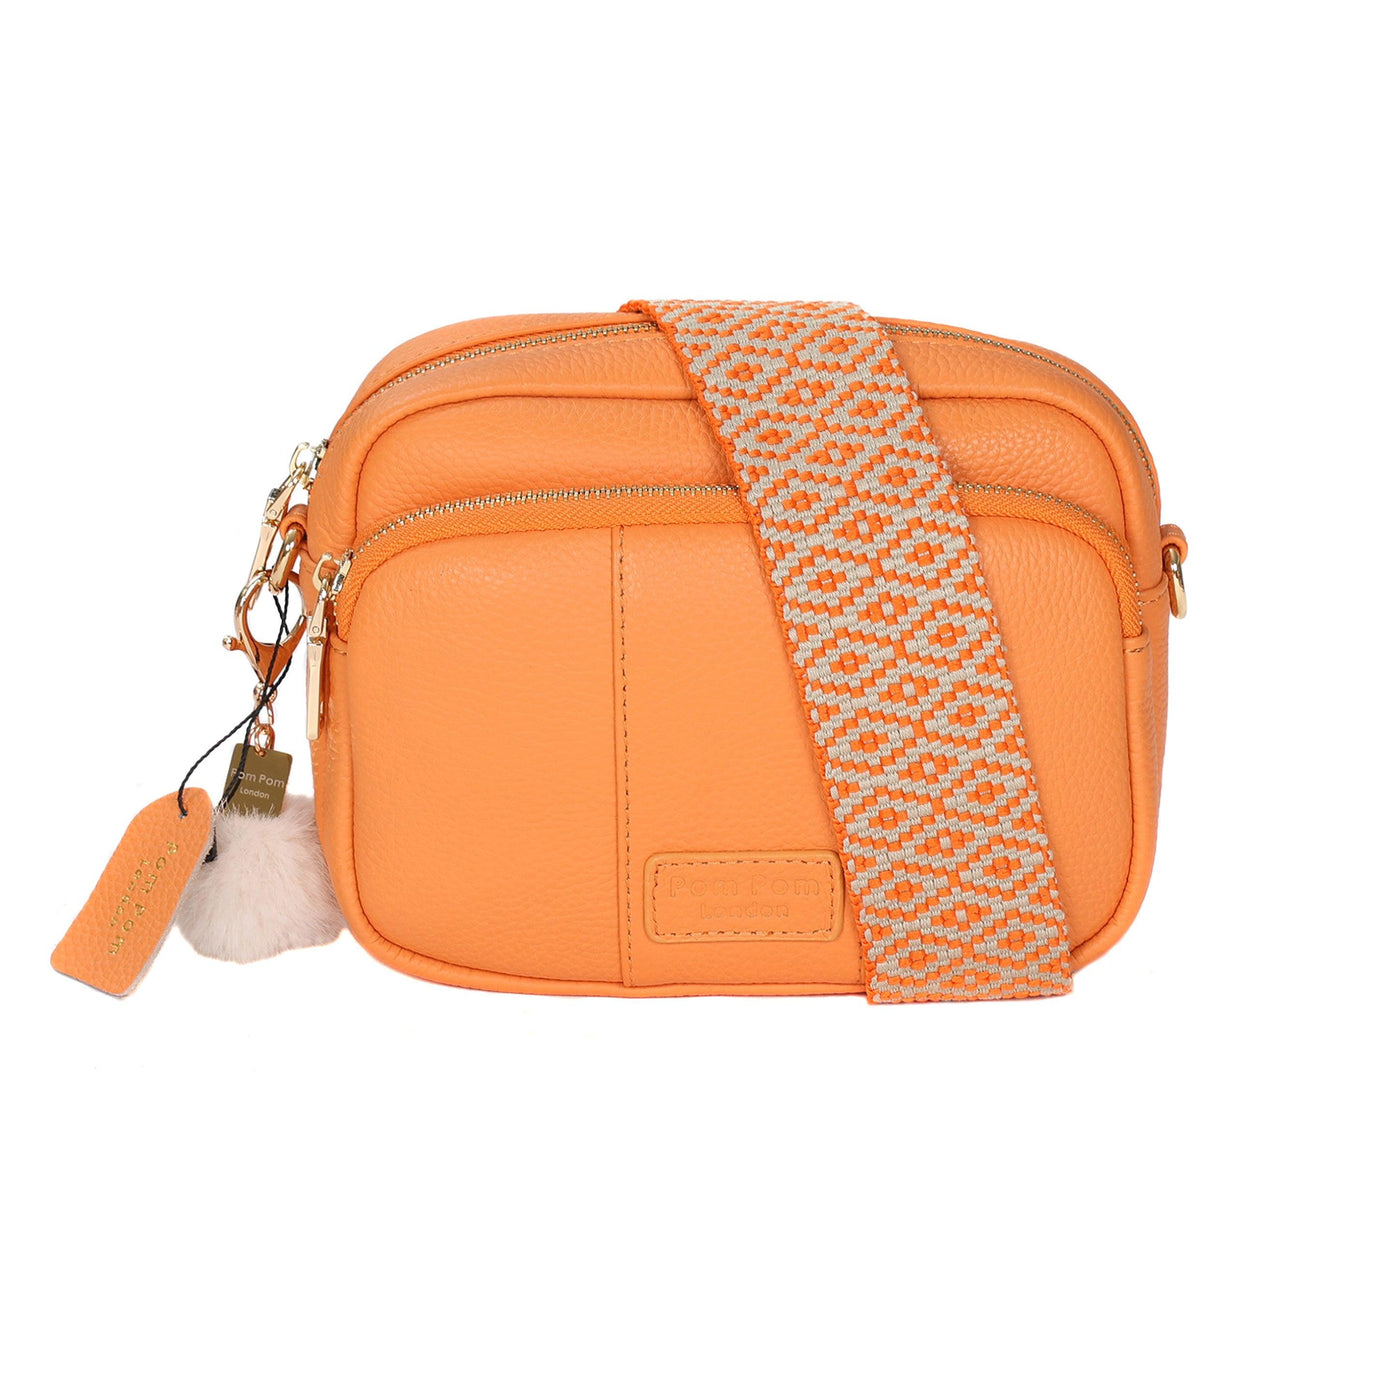 Mayfair Bag Tangerine & Accessories - Pom Pom London